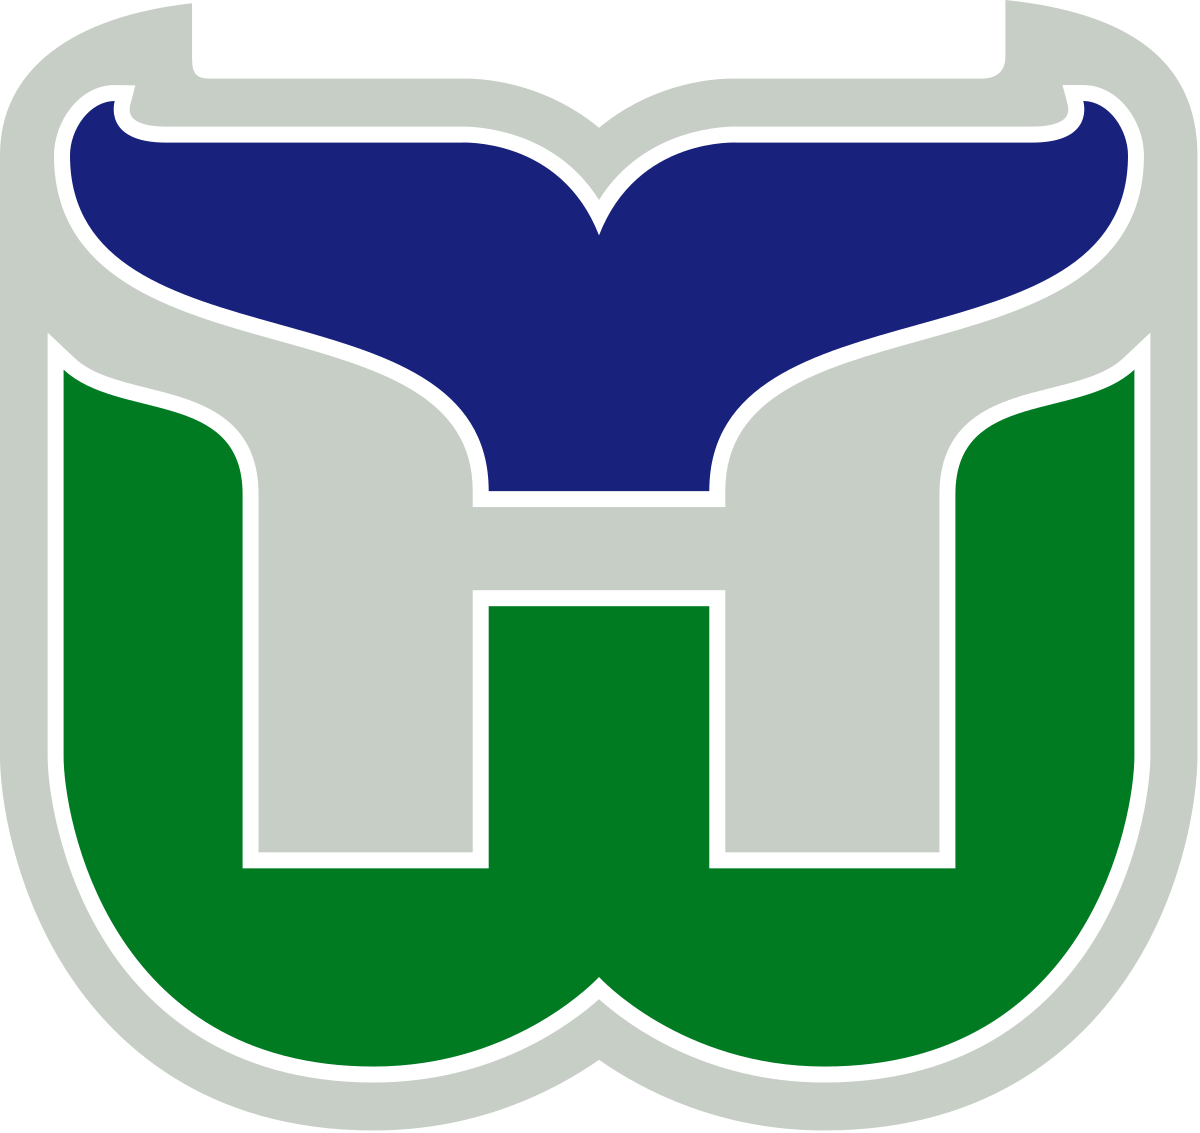 Green and Blue Whale Logo - Hartford Whalers